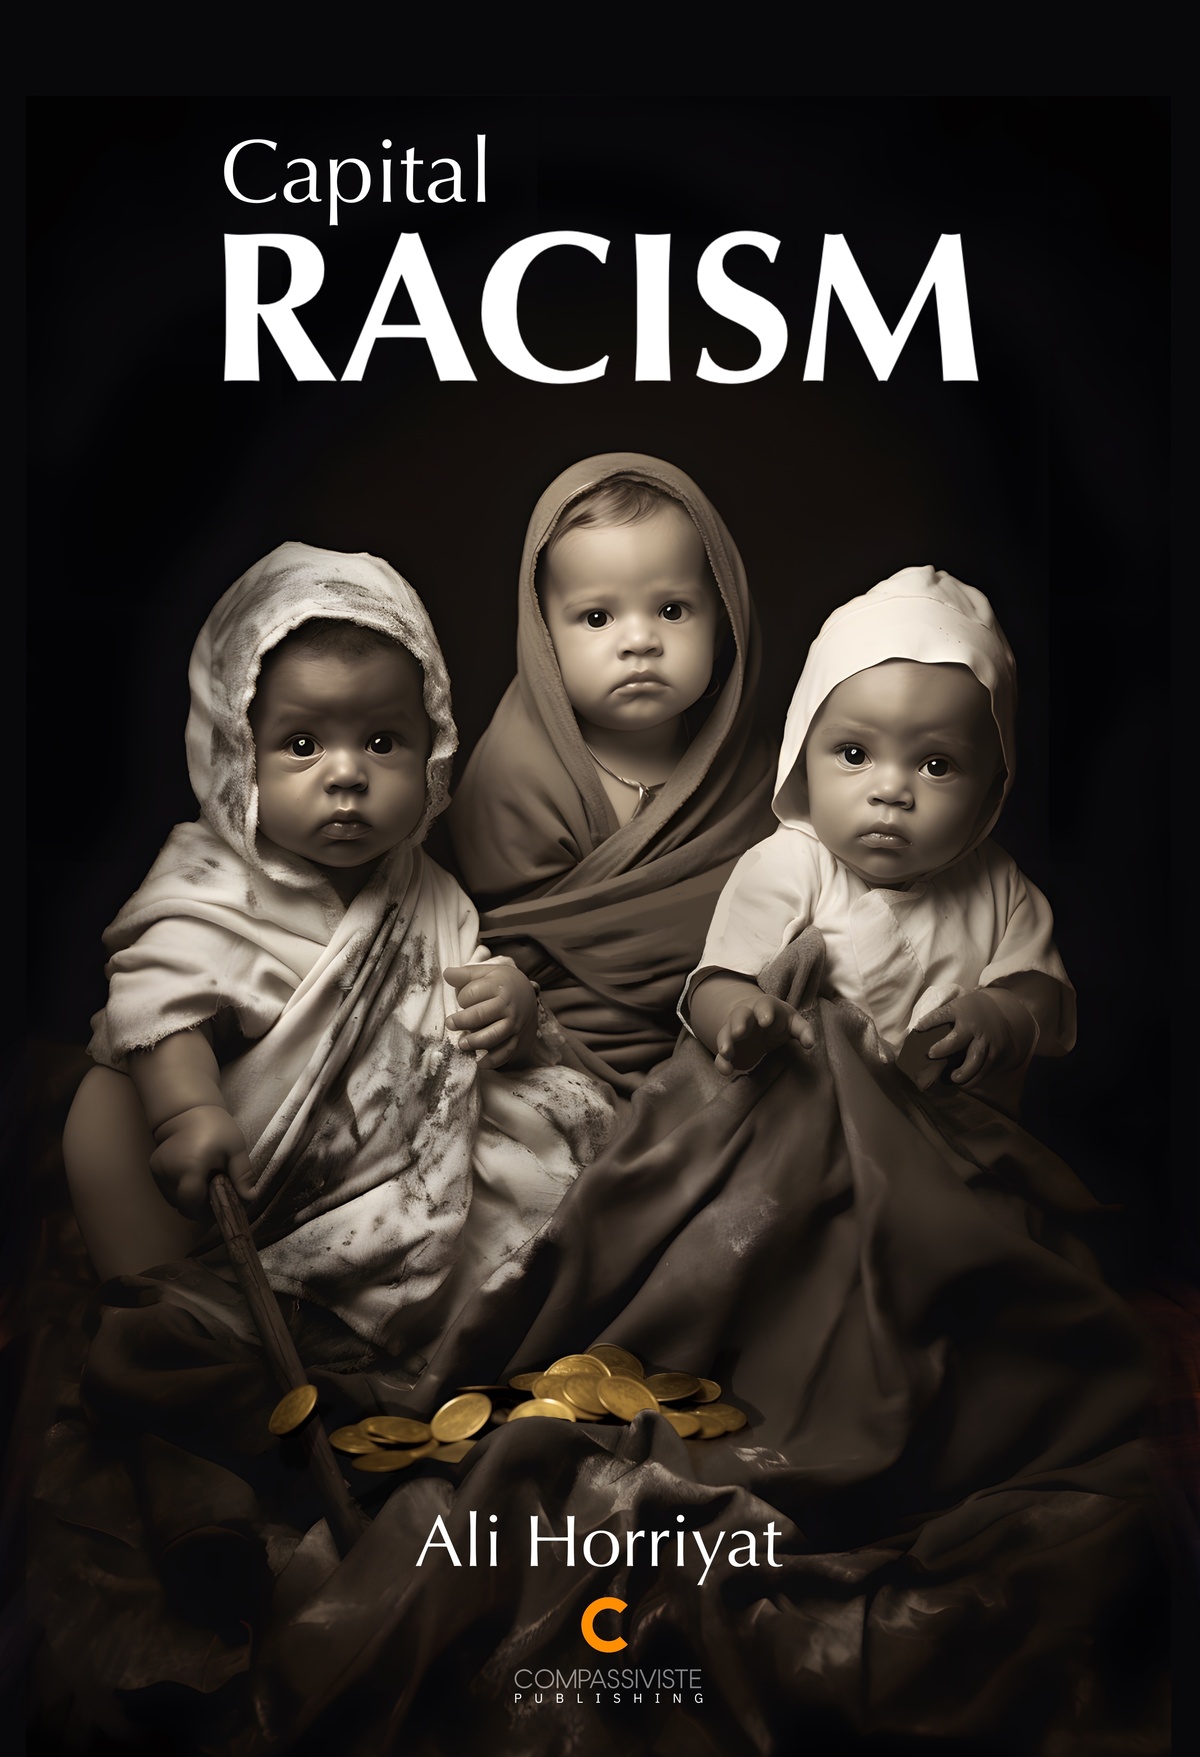 Book cover of Capital Racism by Ali Horriyat